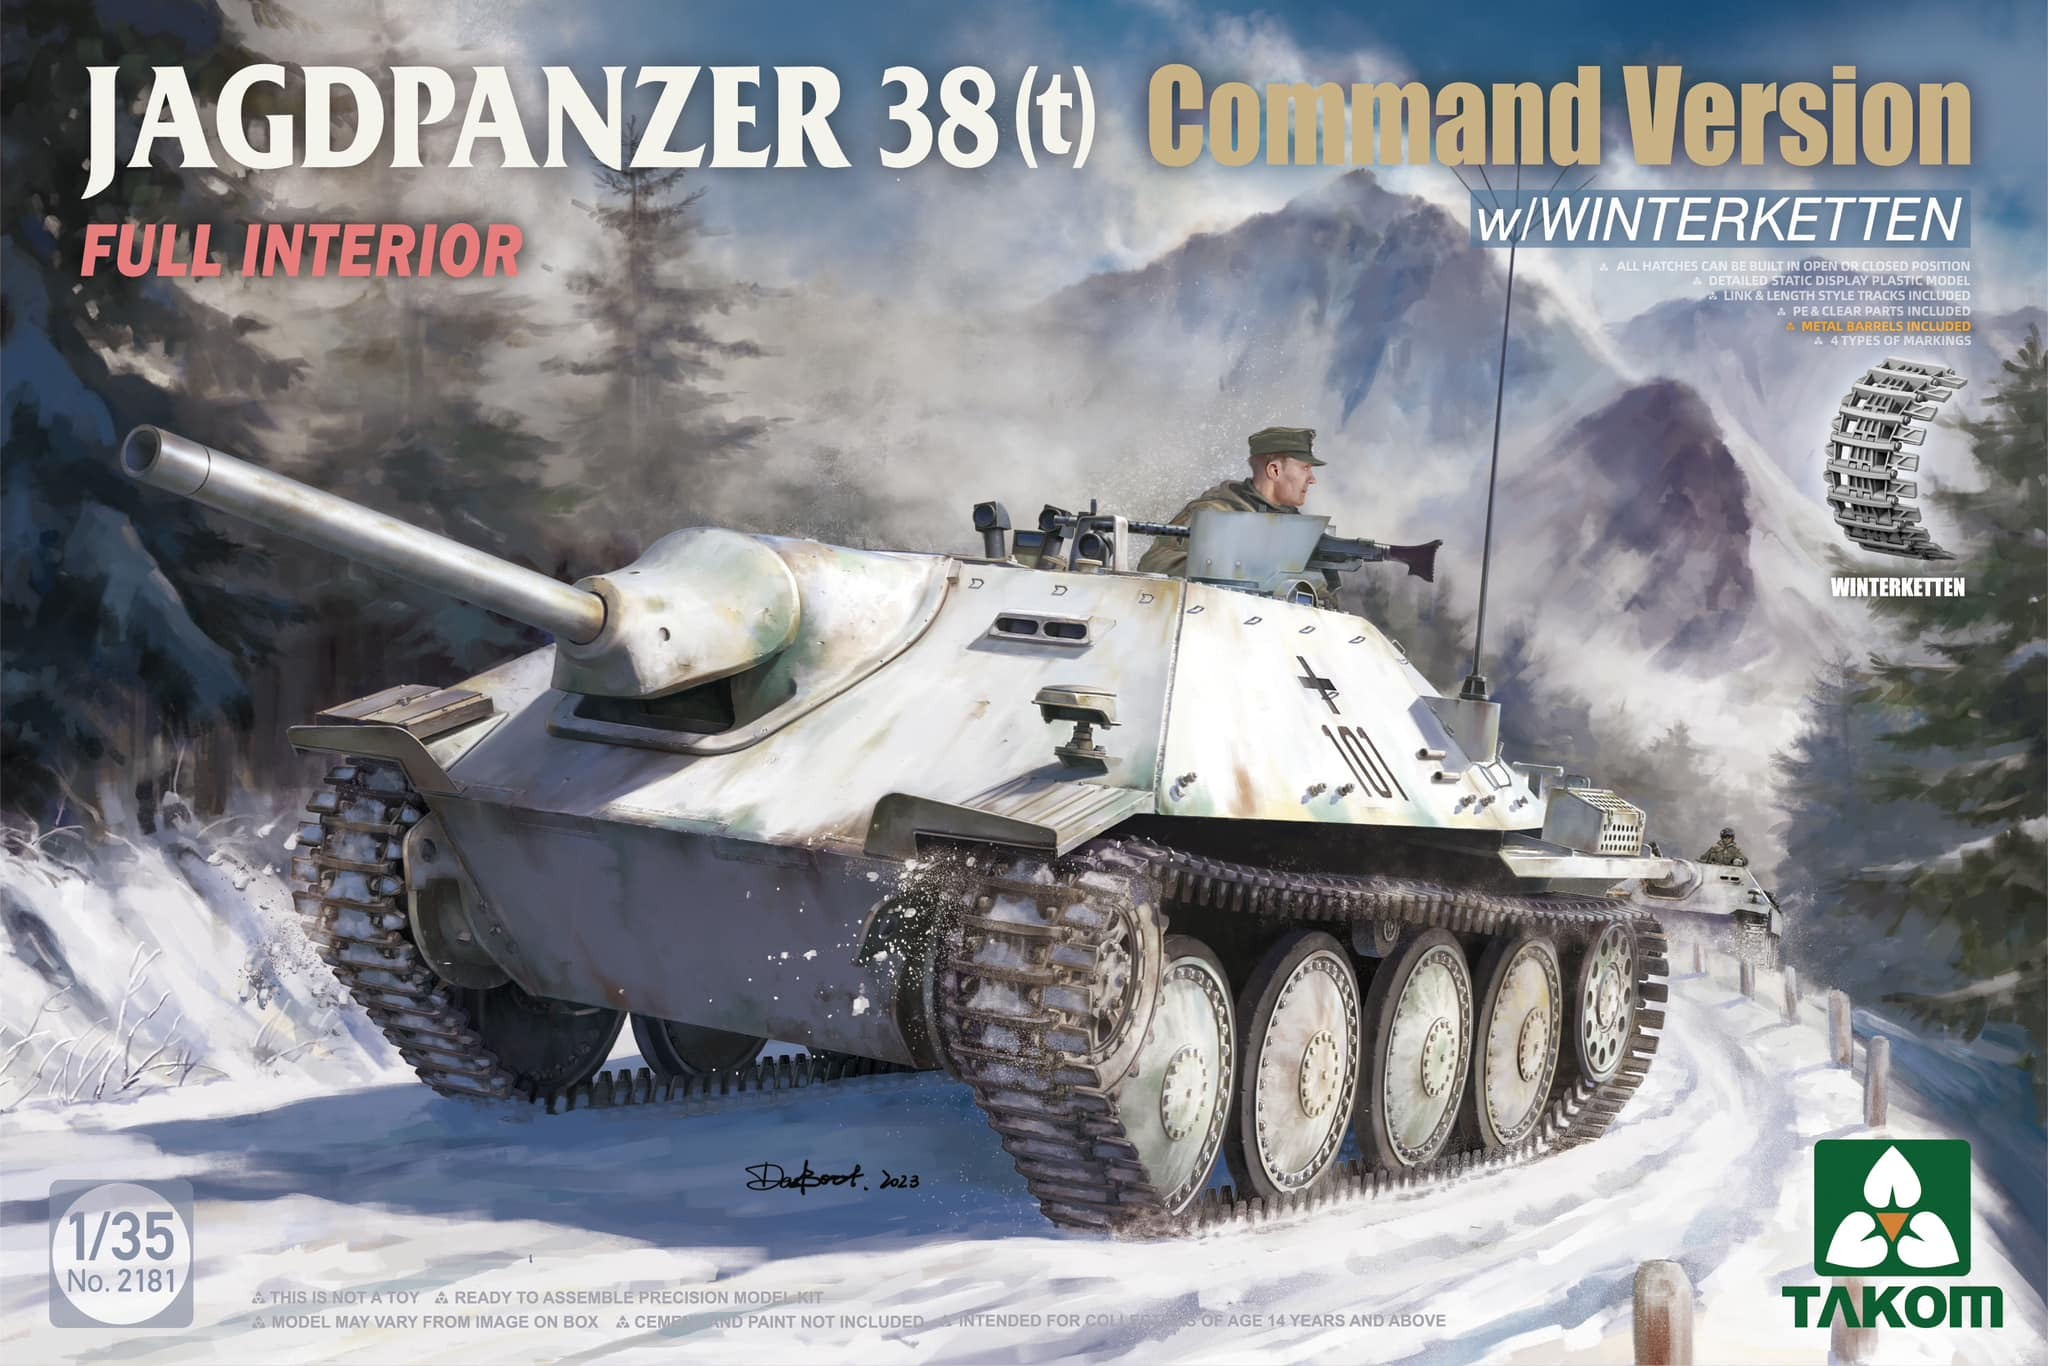 Jagdpanzer 38(t) Command Version